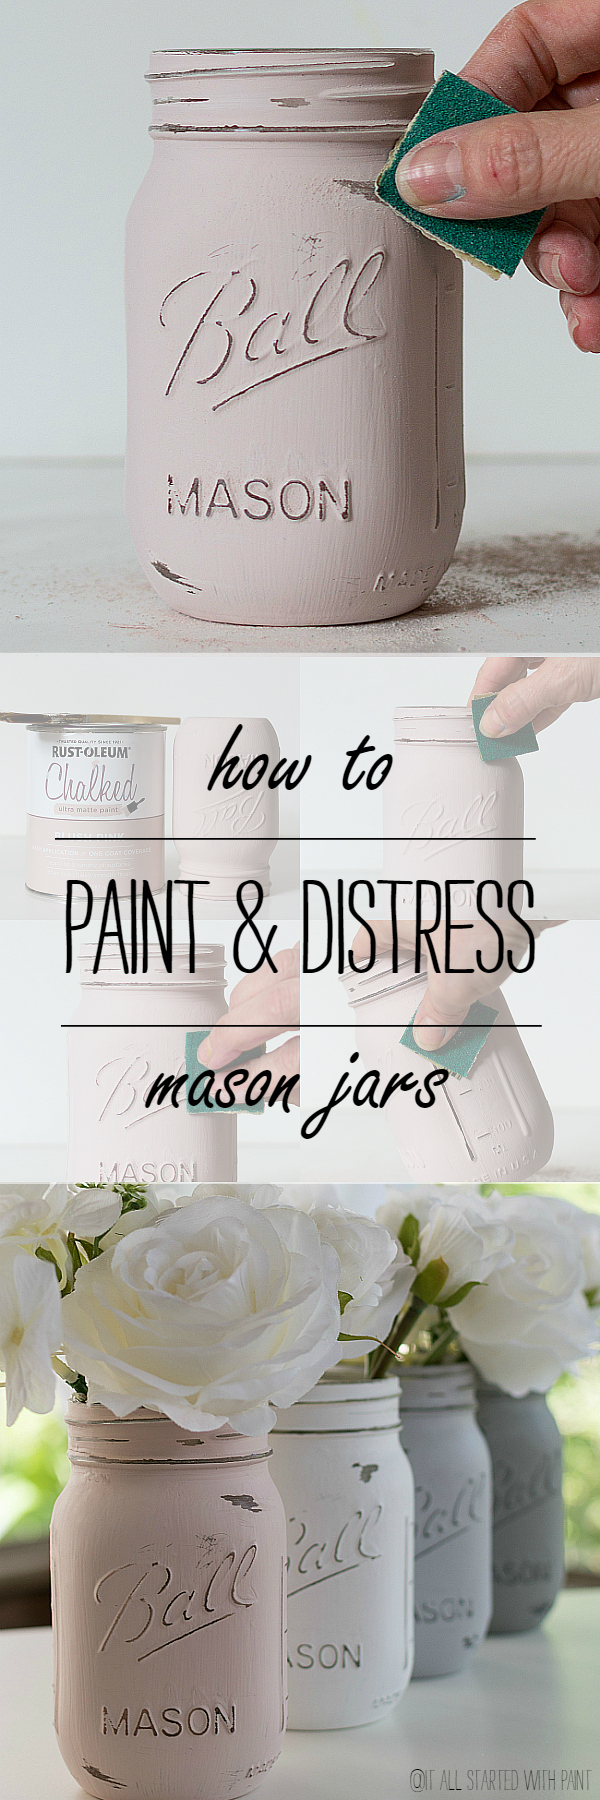 Mason Jar Crafts: How To Paint & Distress mason Jars